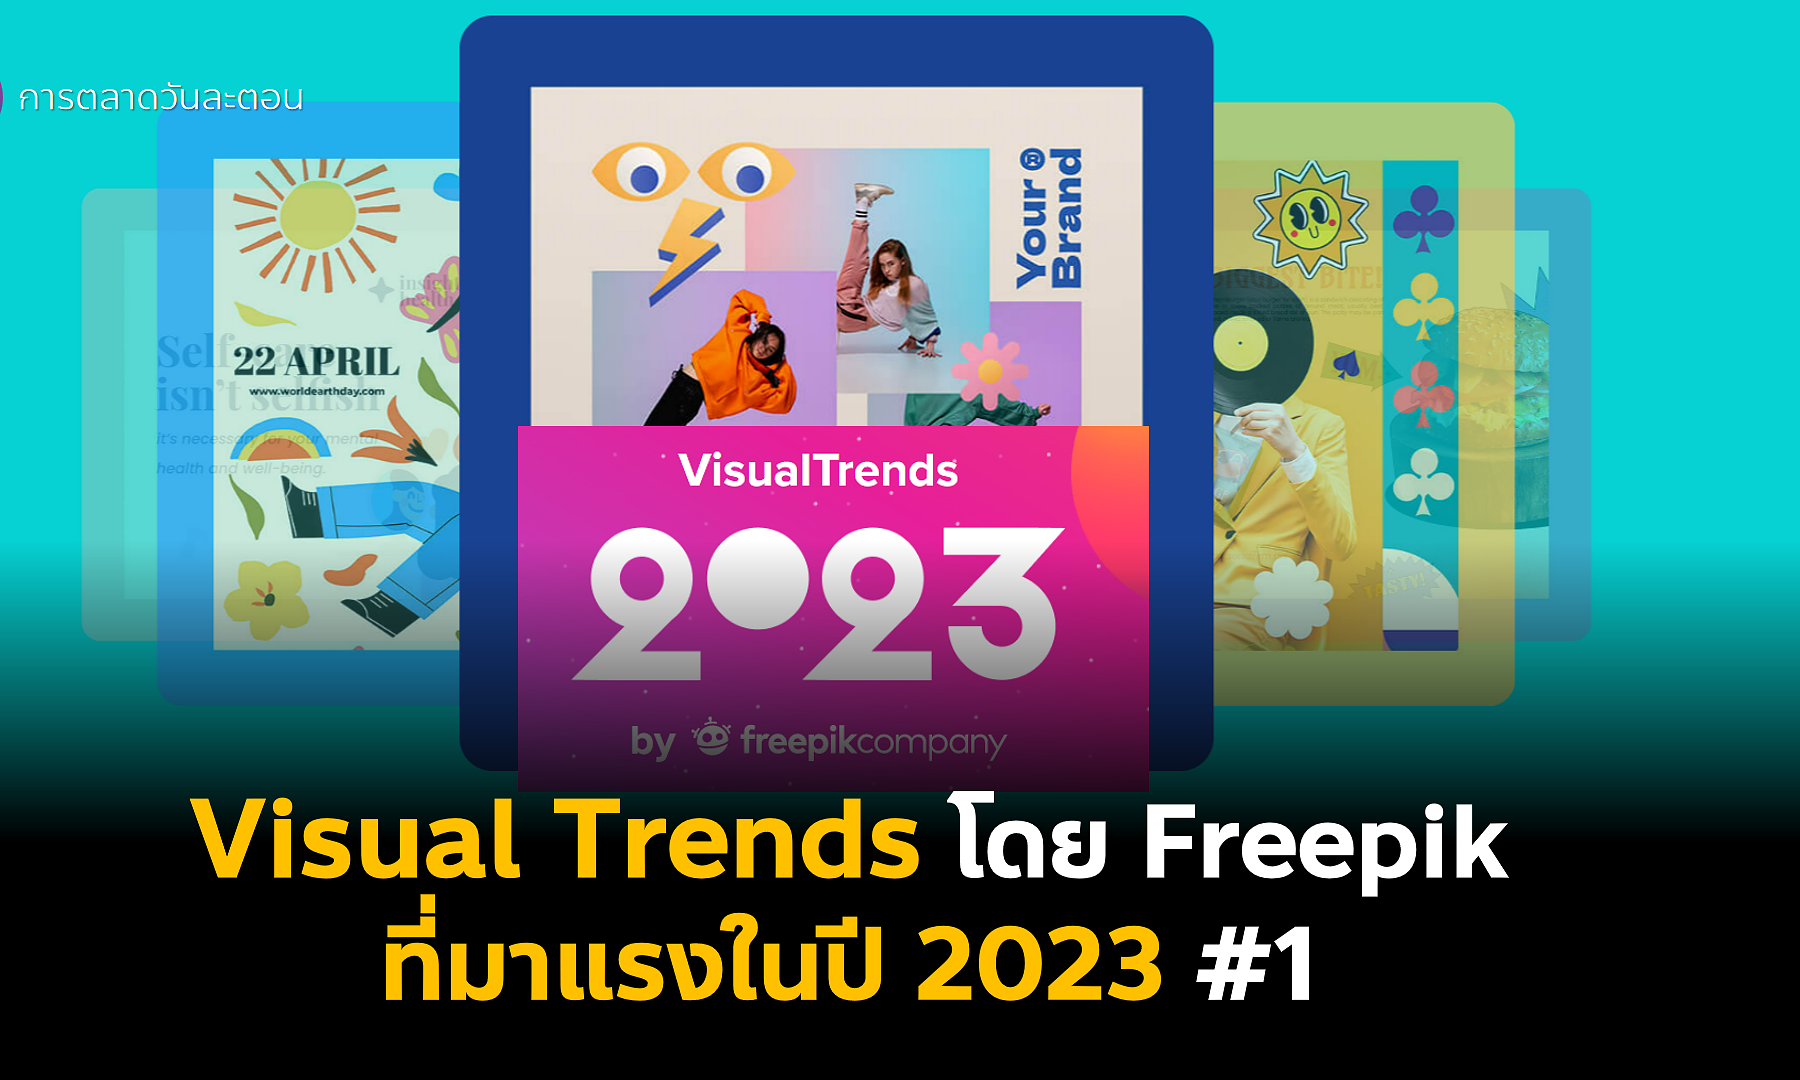 Visual Trends โดย Freepik ที่มาแรงในปี 2023 #1